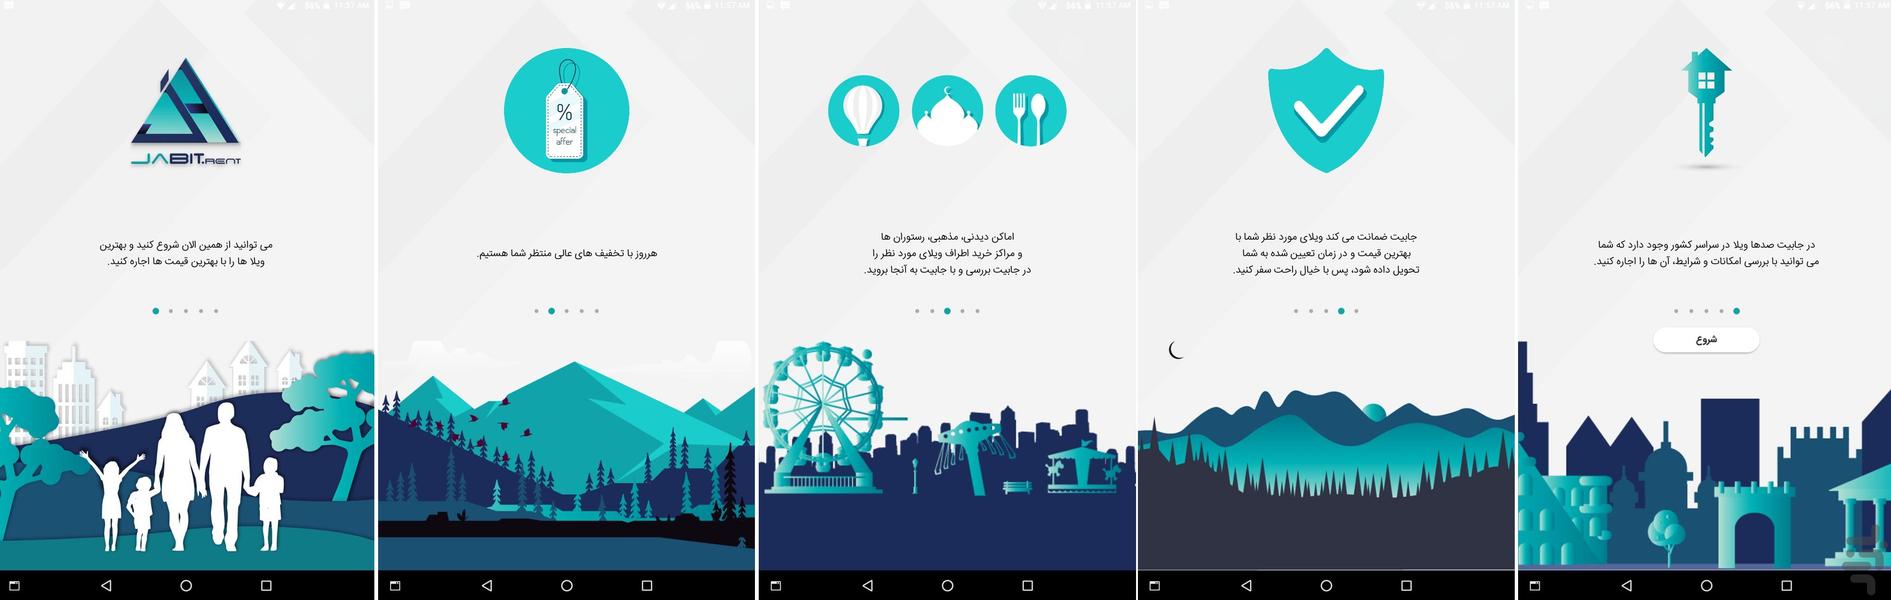 Jabit - Owner - Image screenshot of android app